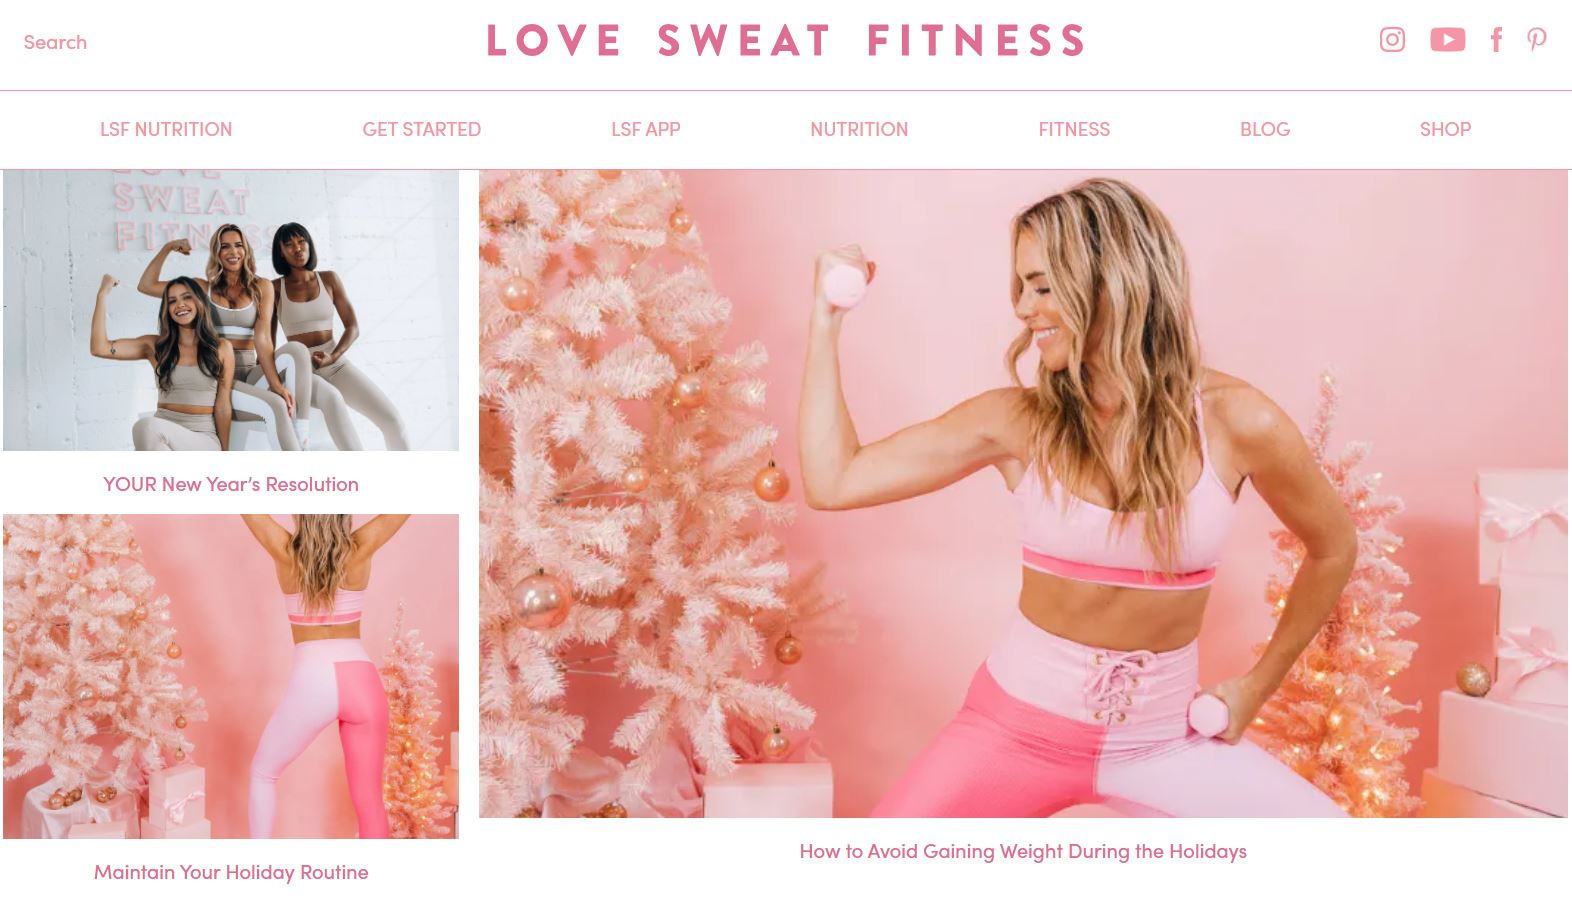 Love Sweat Fitness 博客是最赚钱的博客领域之一； 健康